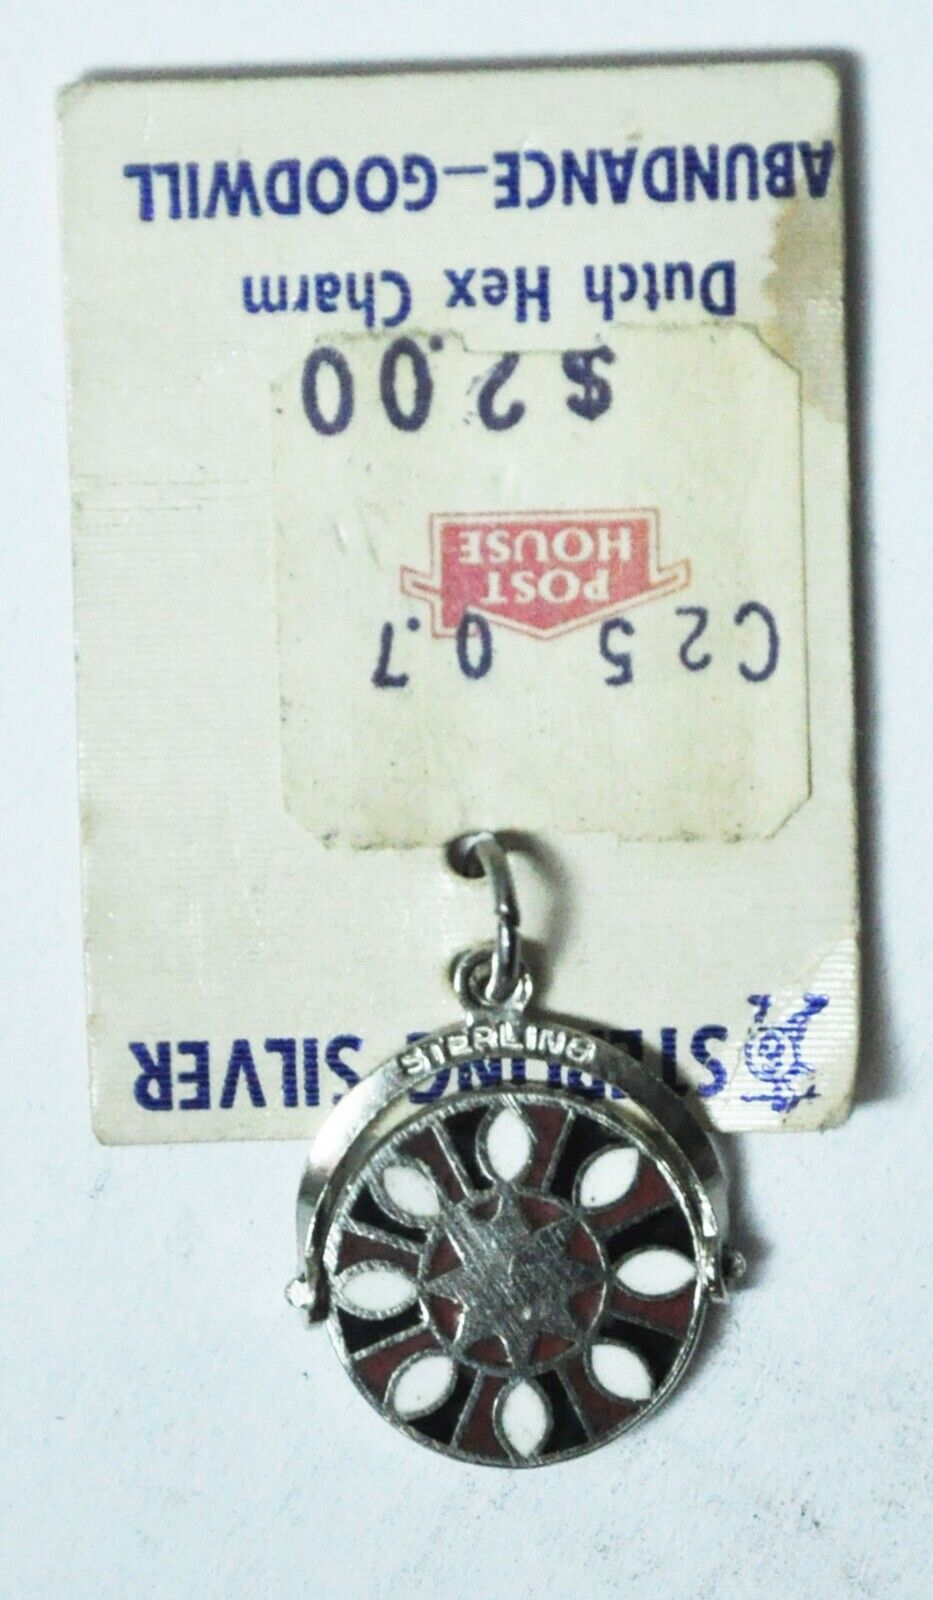 Sterling Silver Dutch Hex Symbol Charm Abundance Goodwill Carded 20mm x 17mm